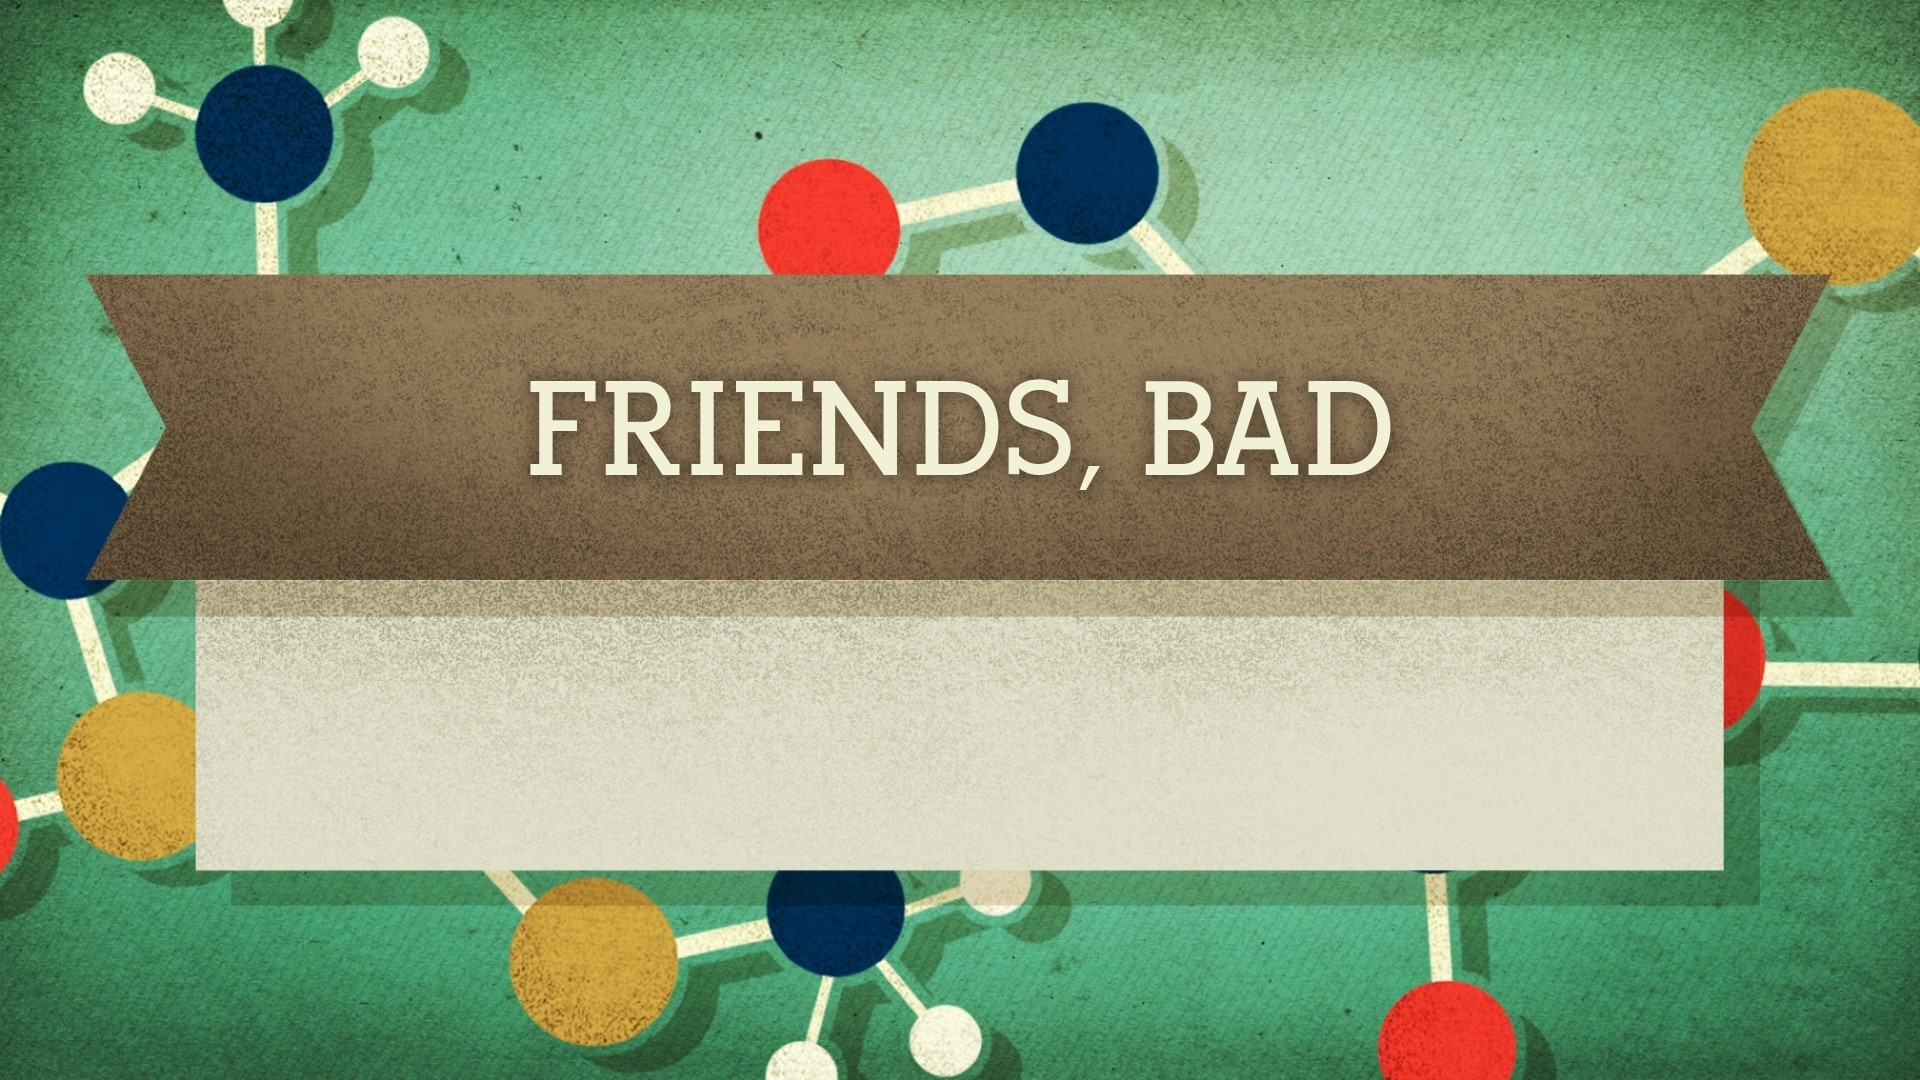 Friends, bad